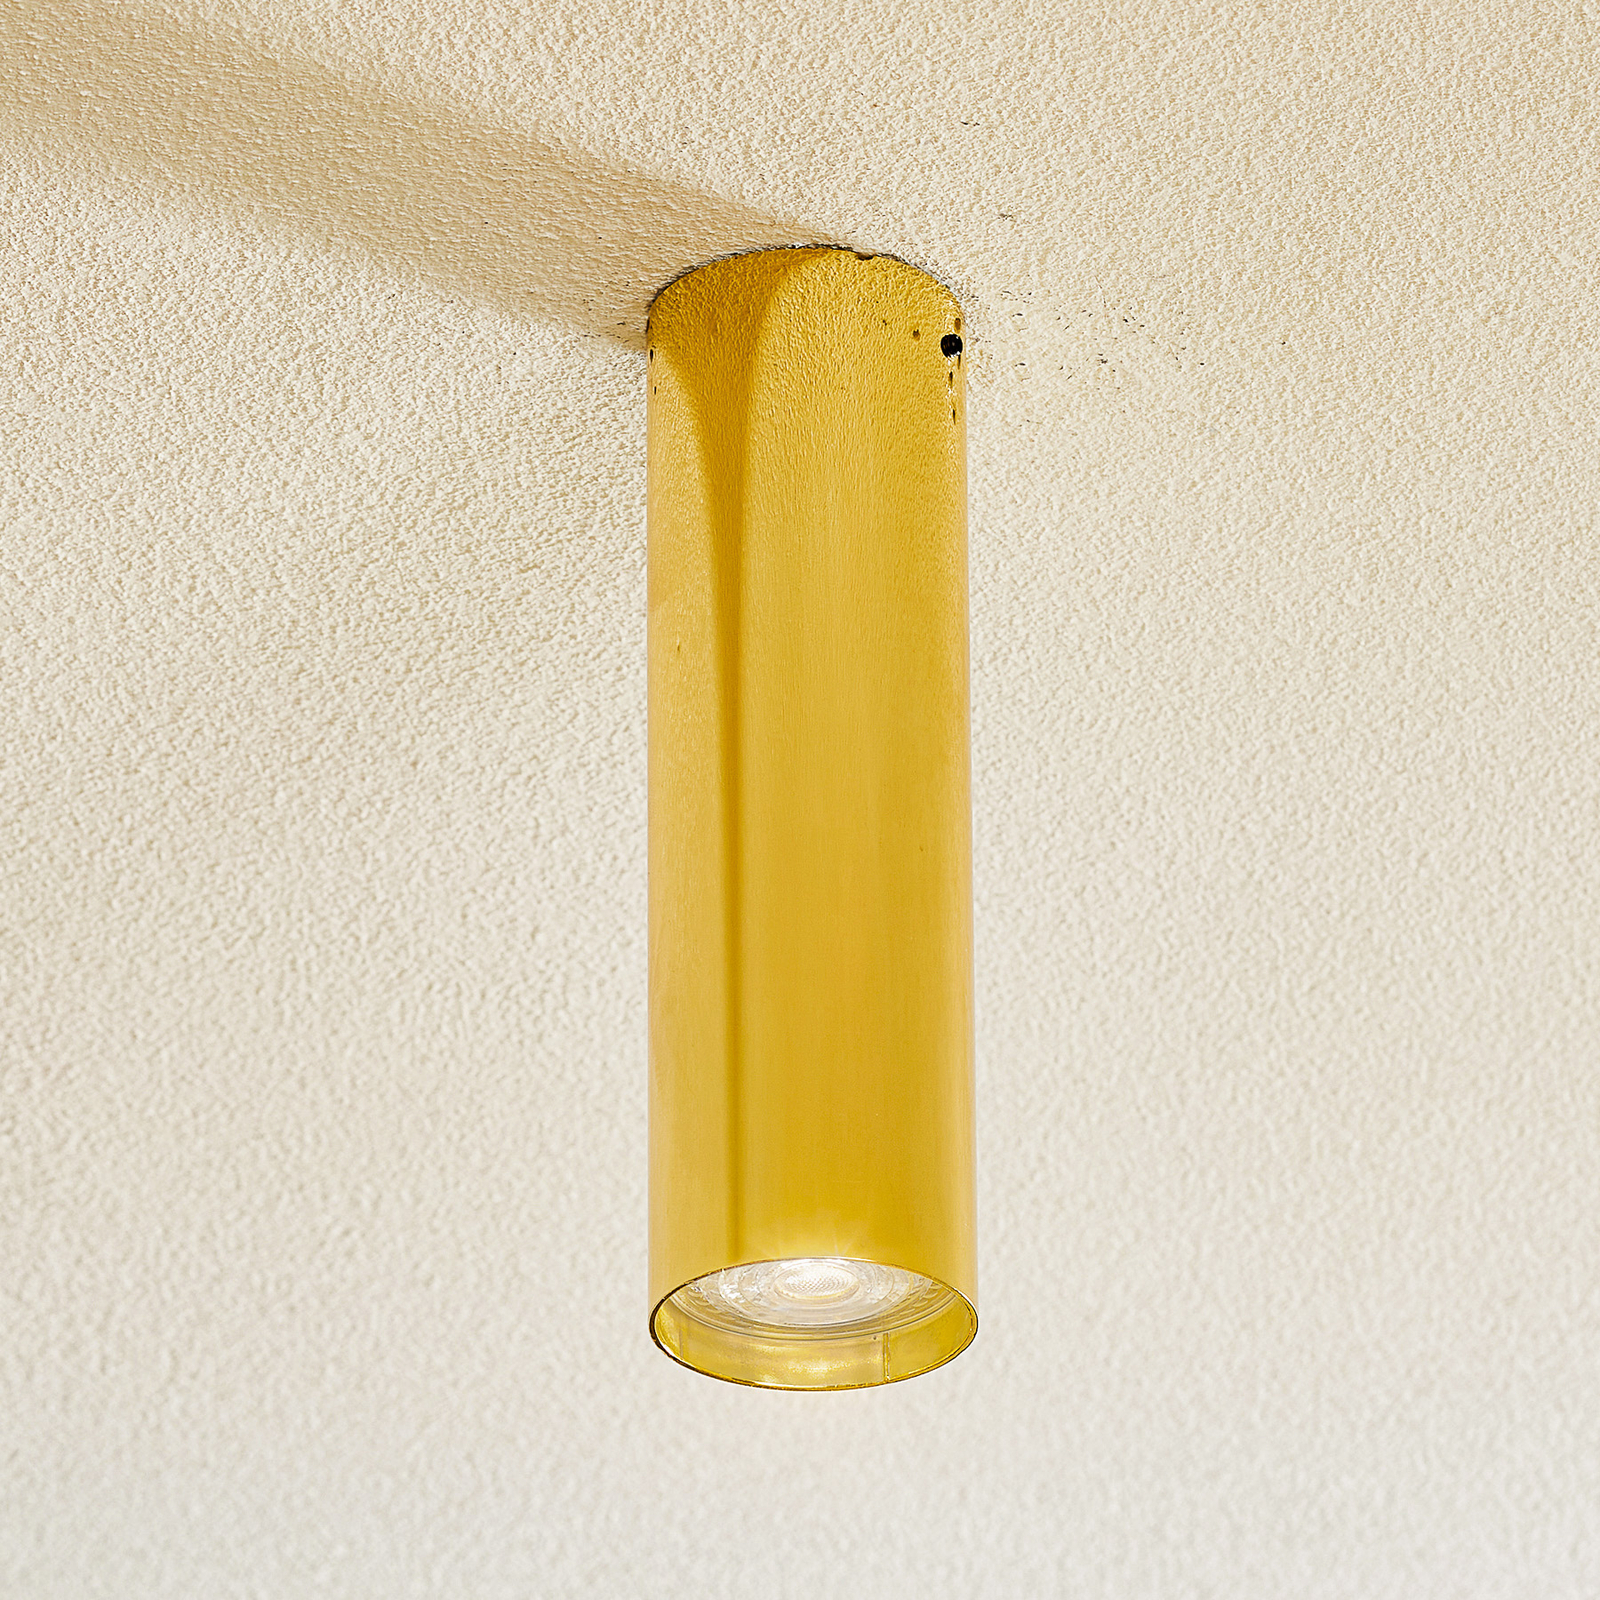 Tesa ceiling spotlight, brass, height 18 cm